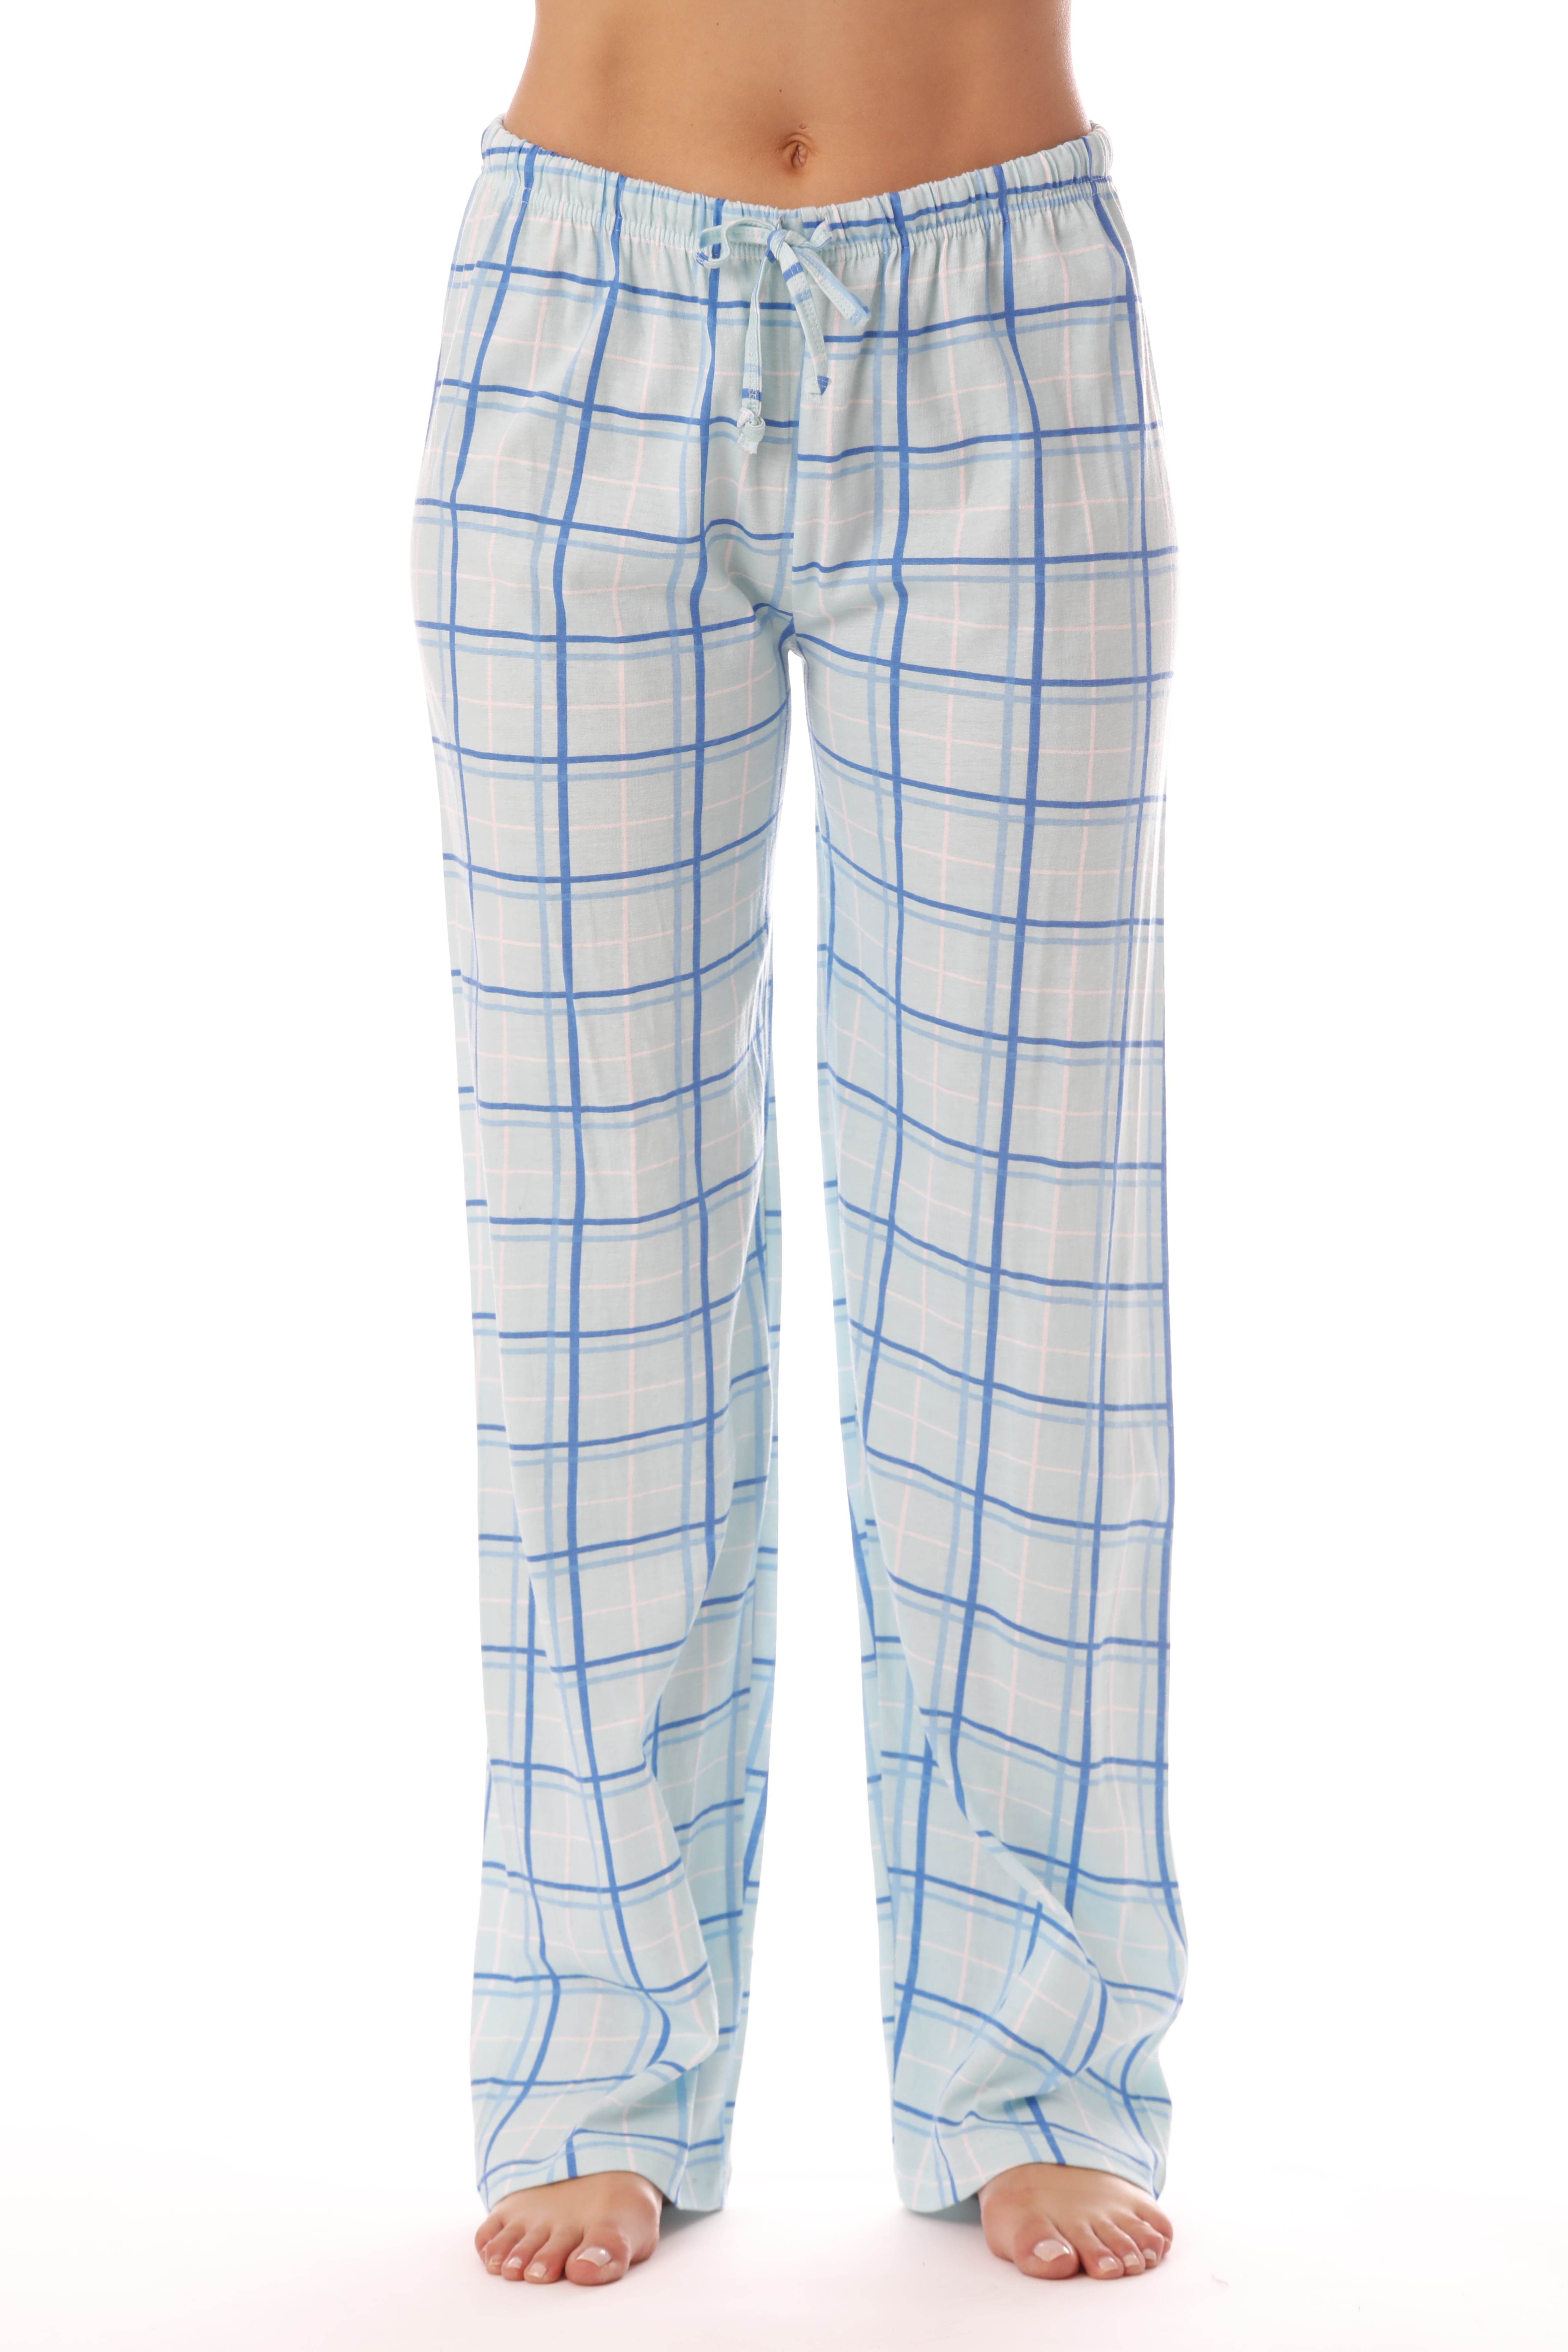 Plaid Pajama Pants - Blue and White – Sorority Intimates